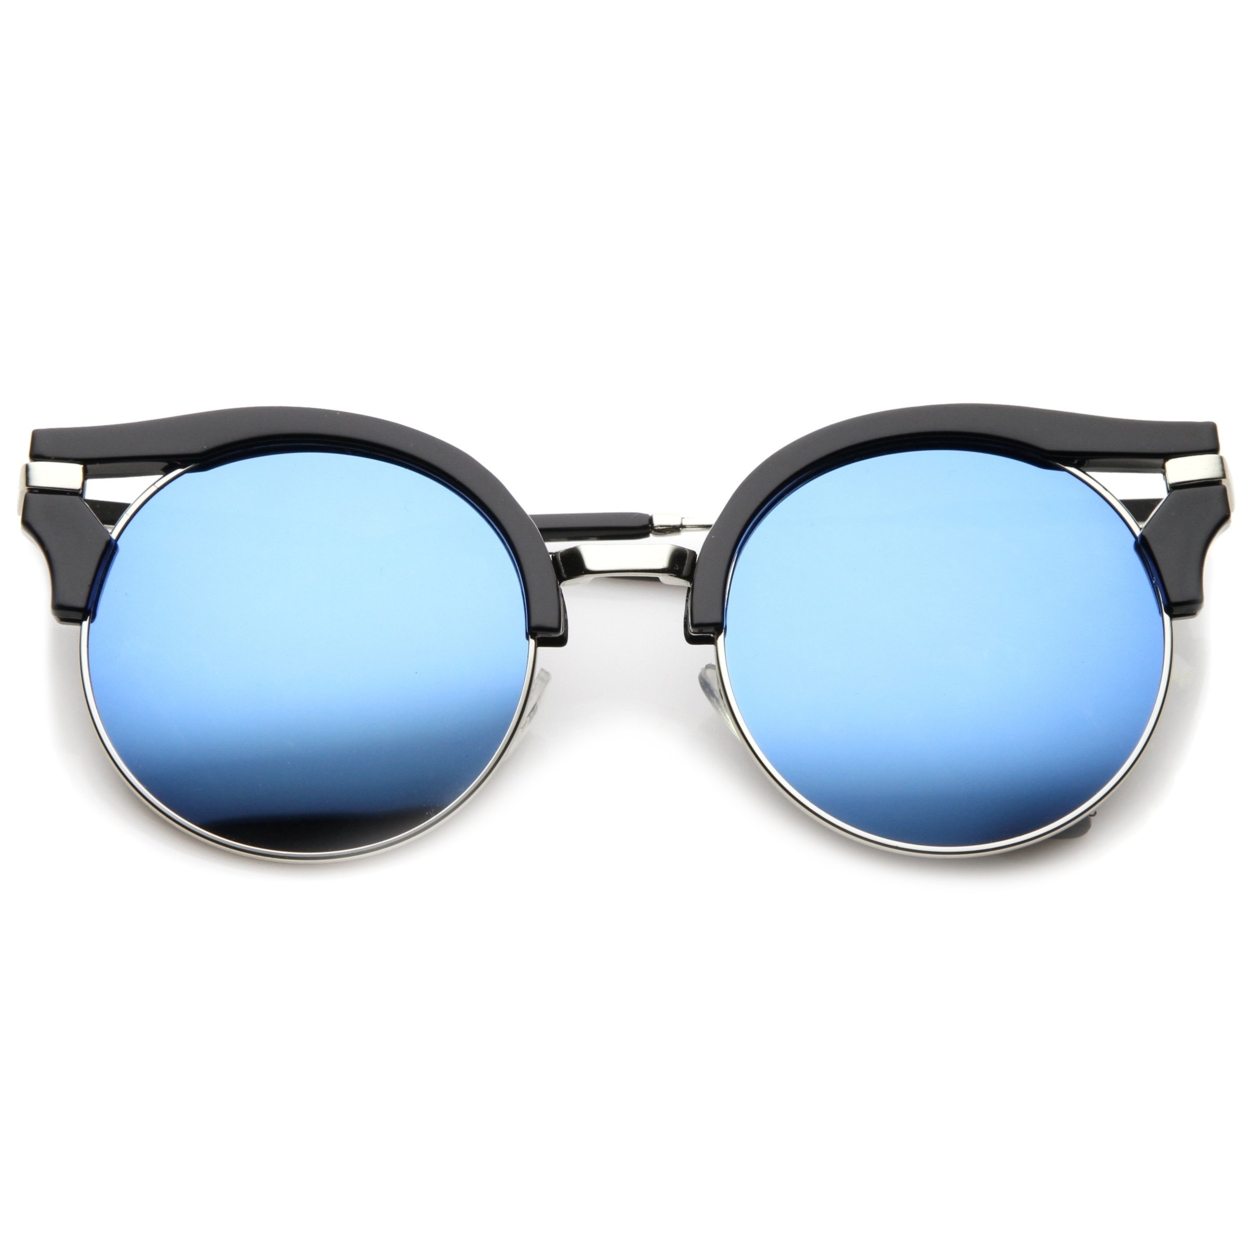 Round Half-Frame Cutout Color Mirror Flat Lens Cat Eye Sunglasses 56mm - Black-Silver / Blue Mirror